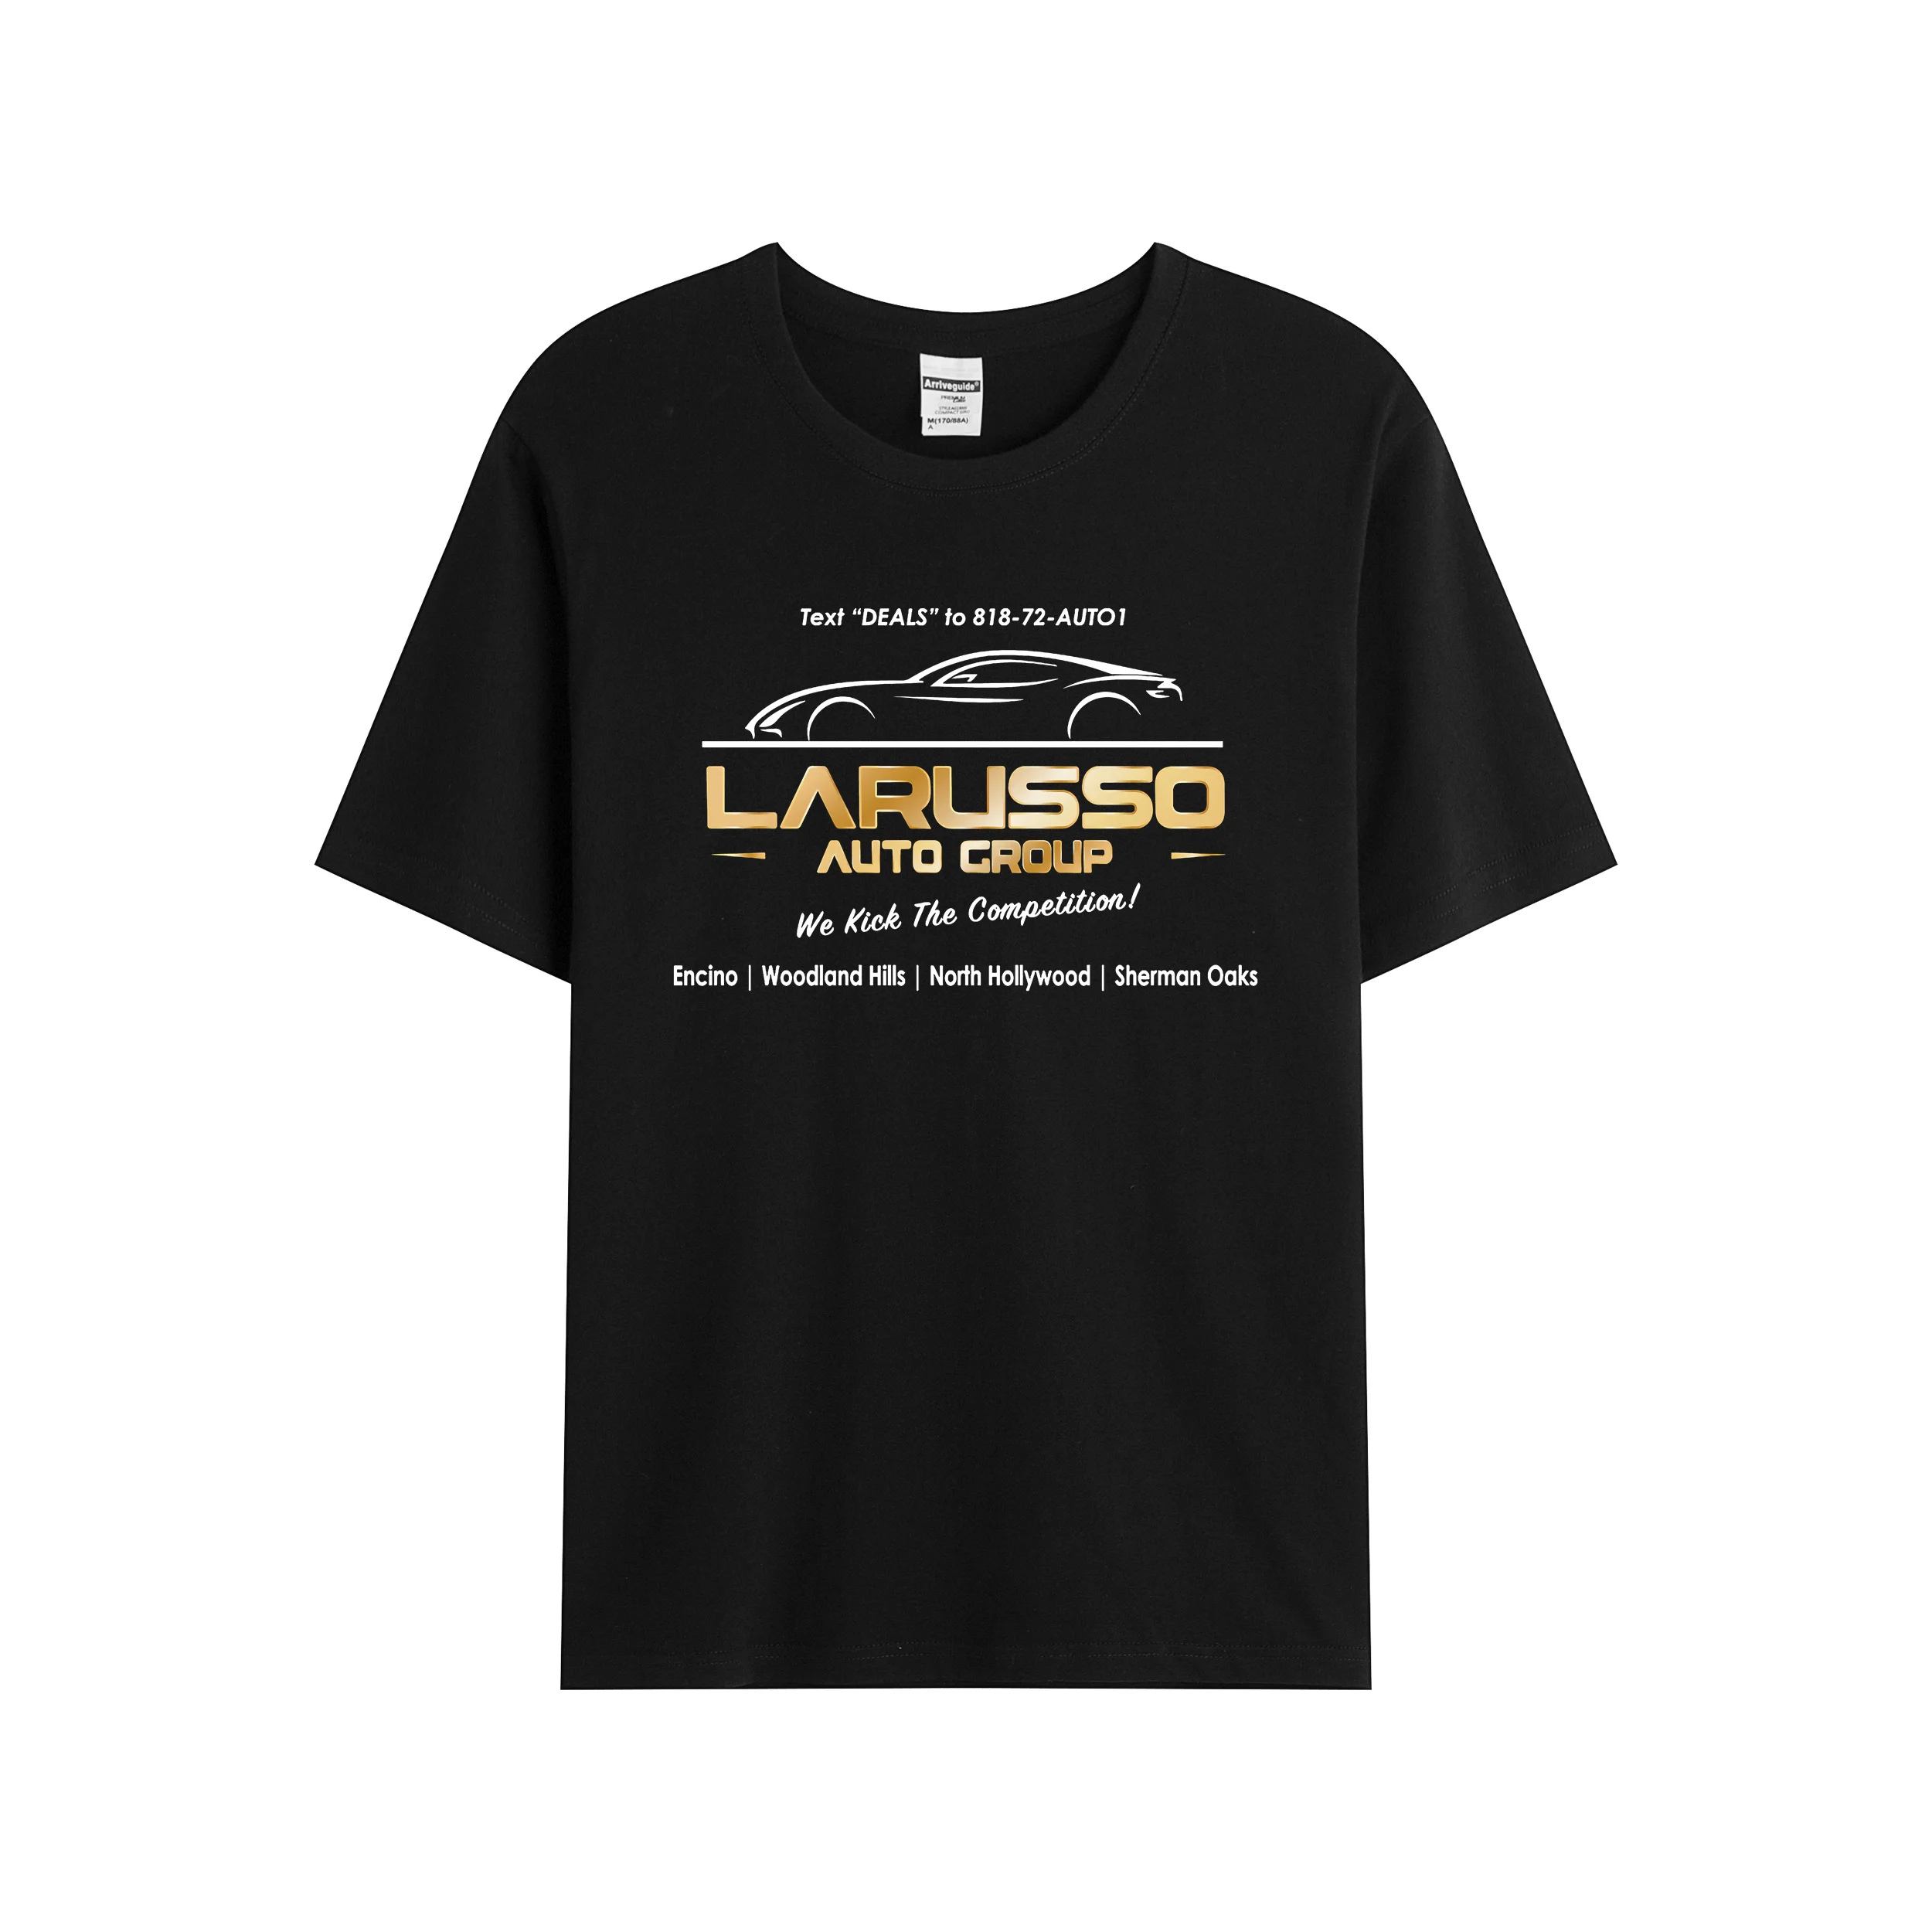 

2021 Men/Women's Summer Black Street Fashion Hip Hop Larusso Auto Group Billboard T-shirt Cotton Tees Short Sleeve Tops